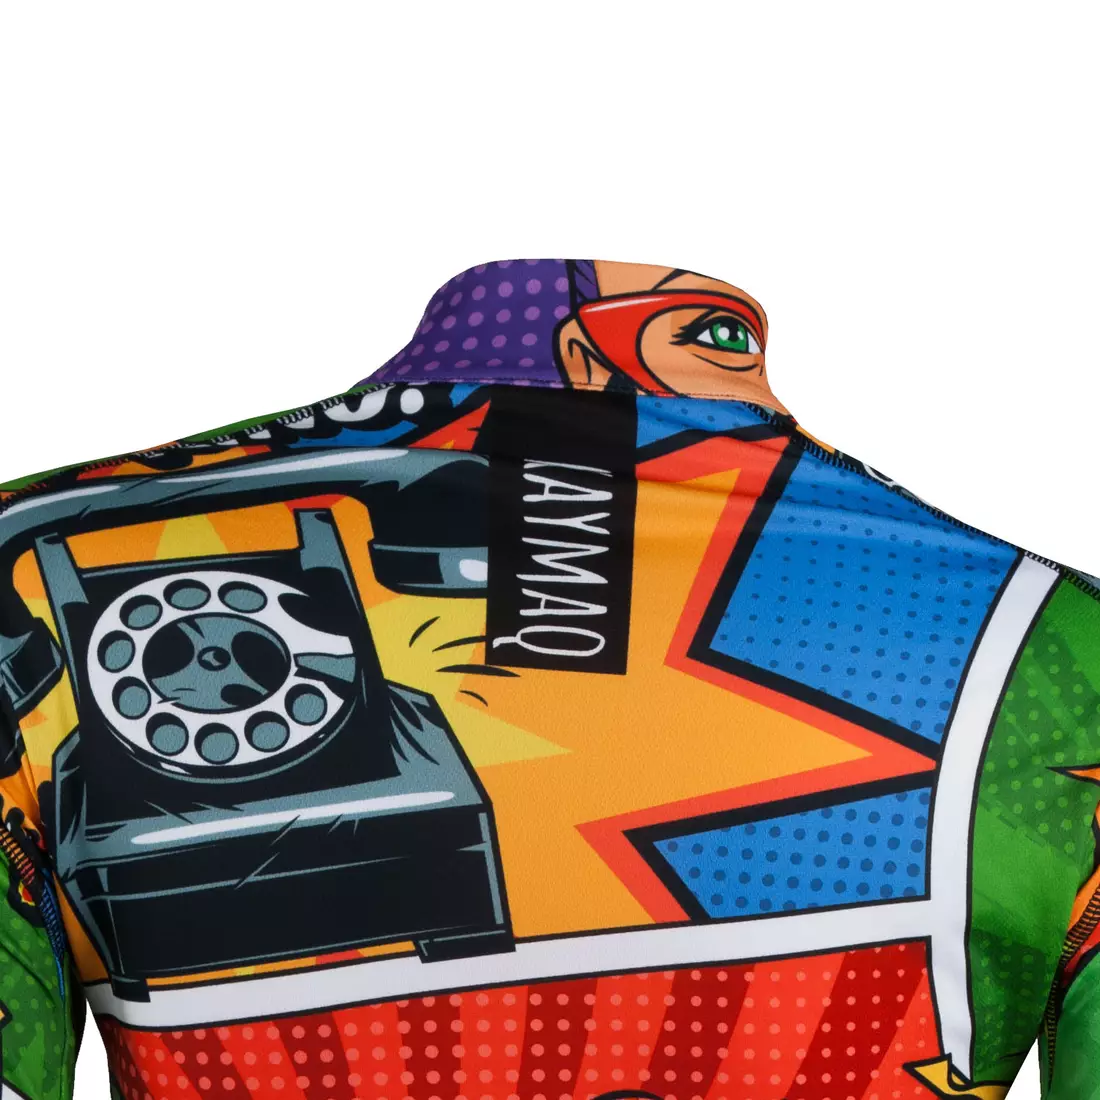 [Set] KAYMAQ DESIGN dámský cyklistický dres s krátkým rukávem W26  + KAYMAQ DESIGN dámský cyklistický dres W26 